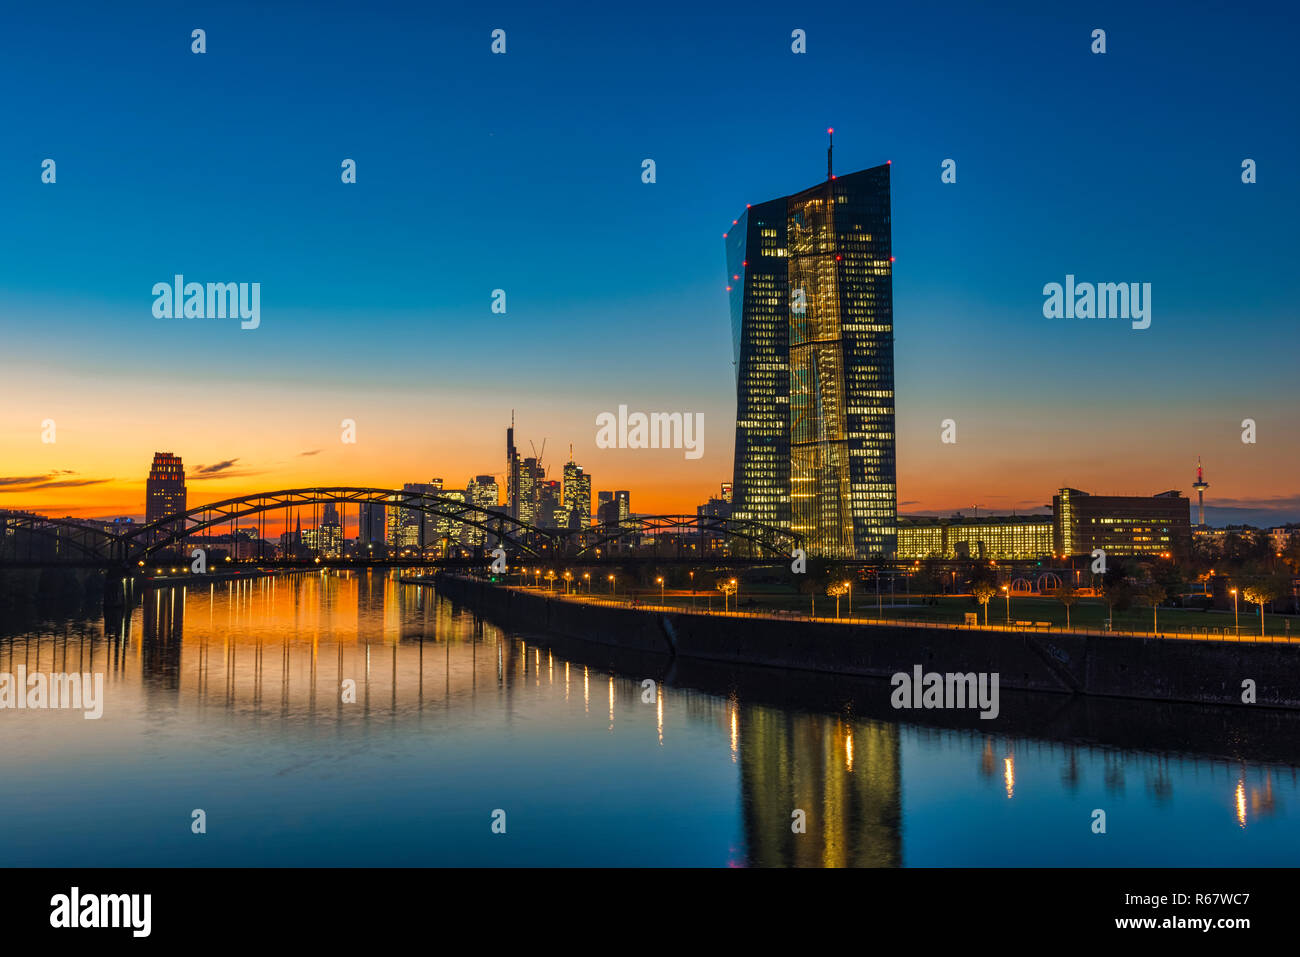 European Central Bank, ECB in front of the illuminated skyline, Osthafenbrücke, dusk, Frankfurt am Main, Hesse, Germany Stock Photo